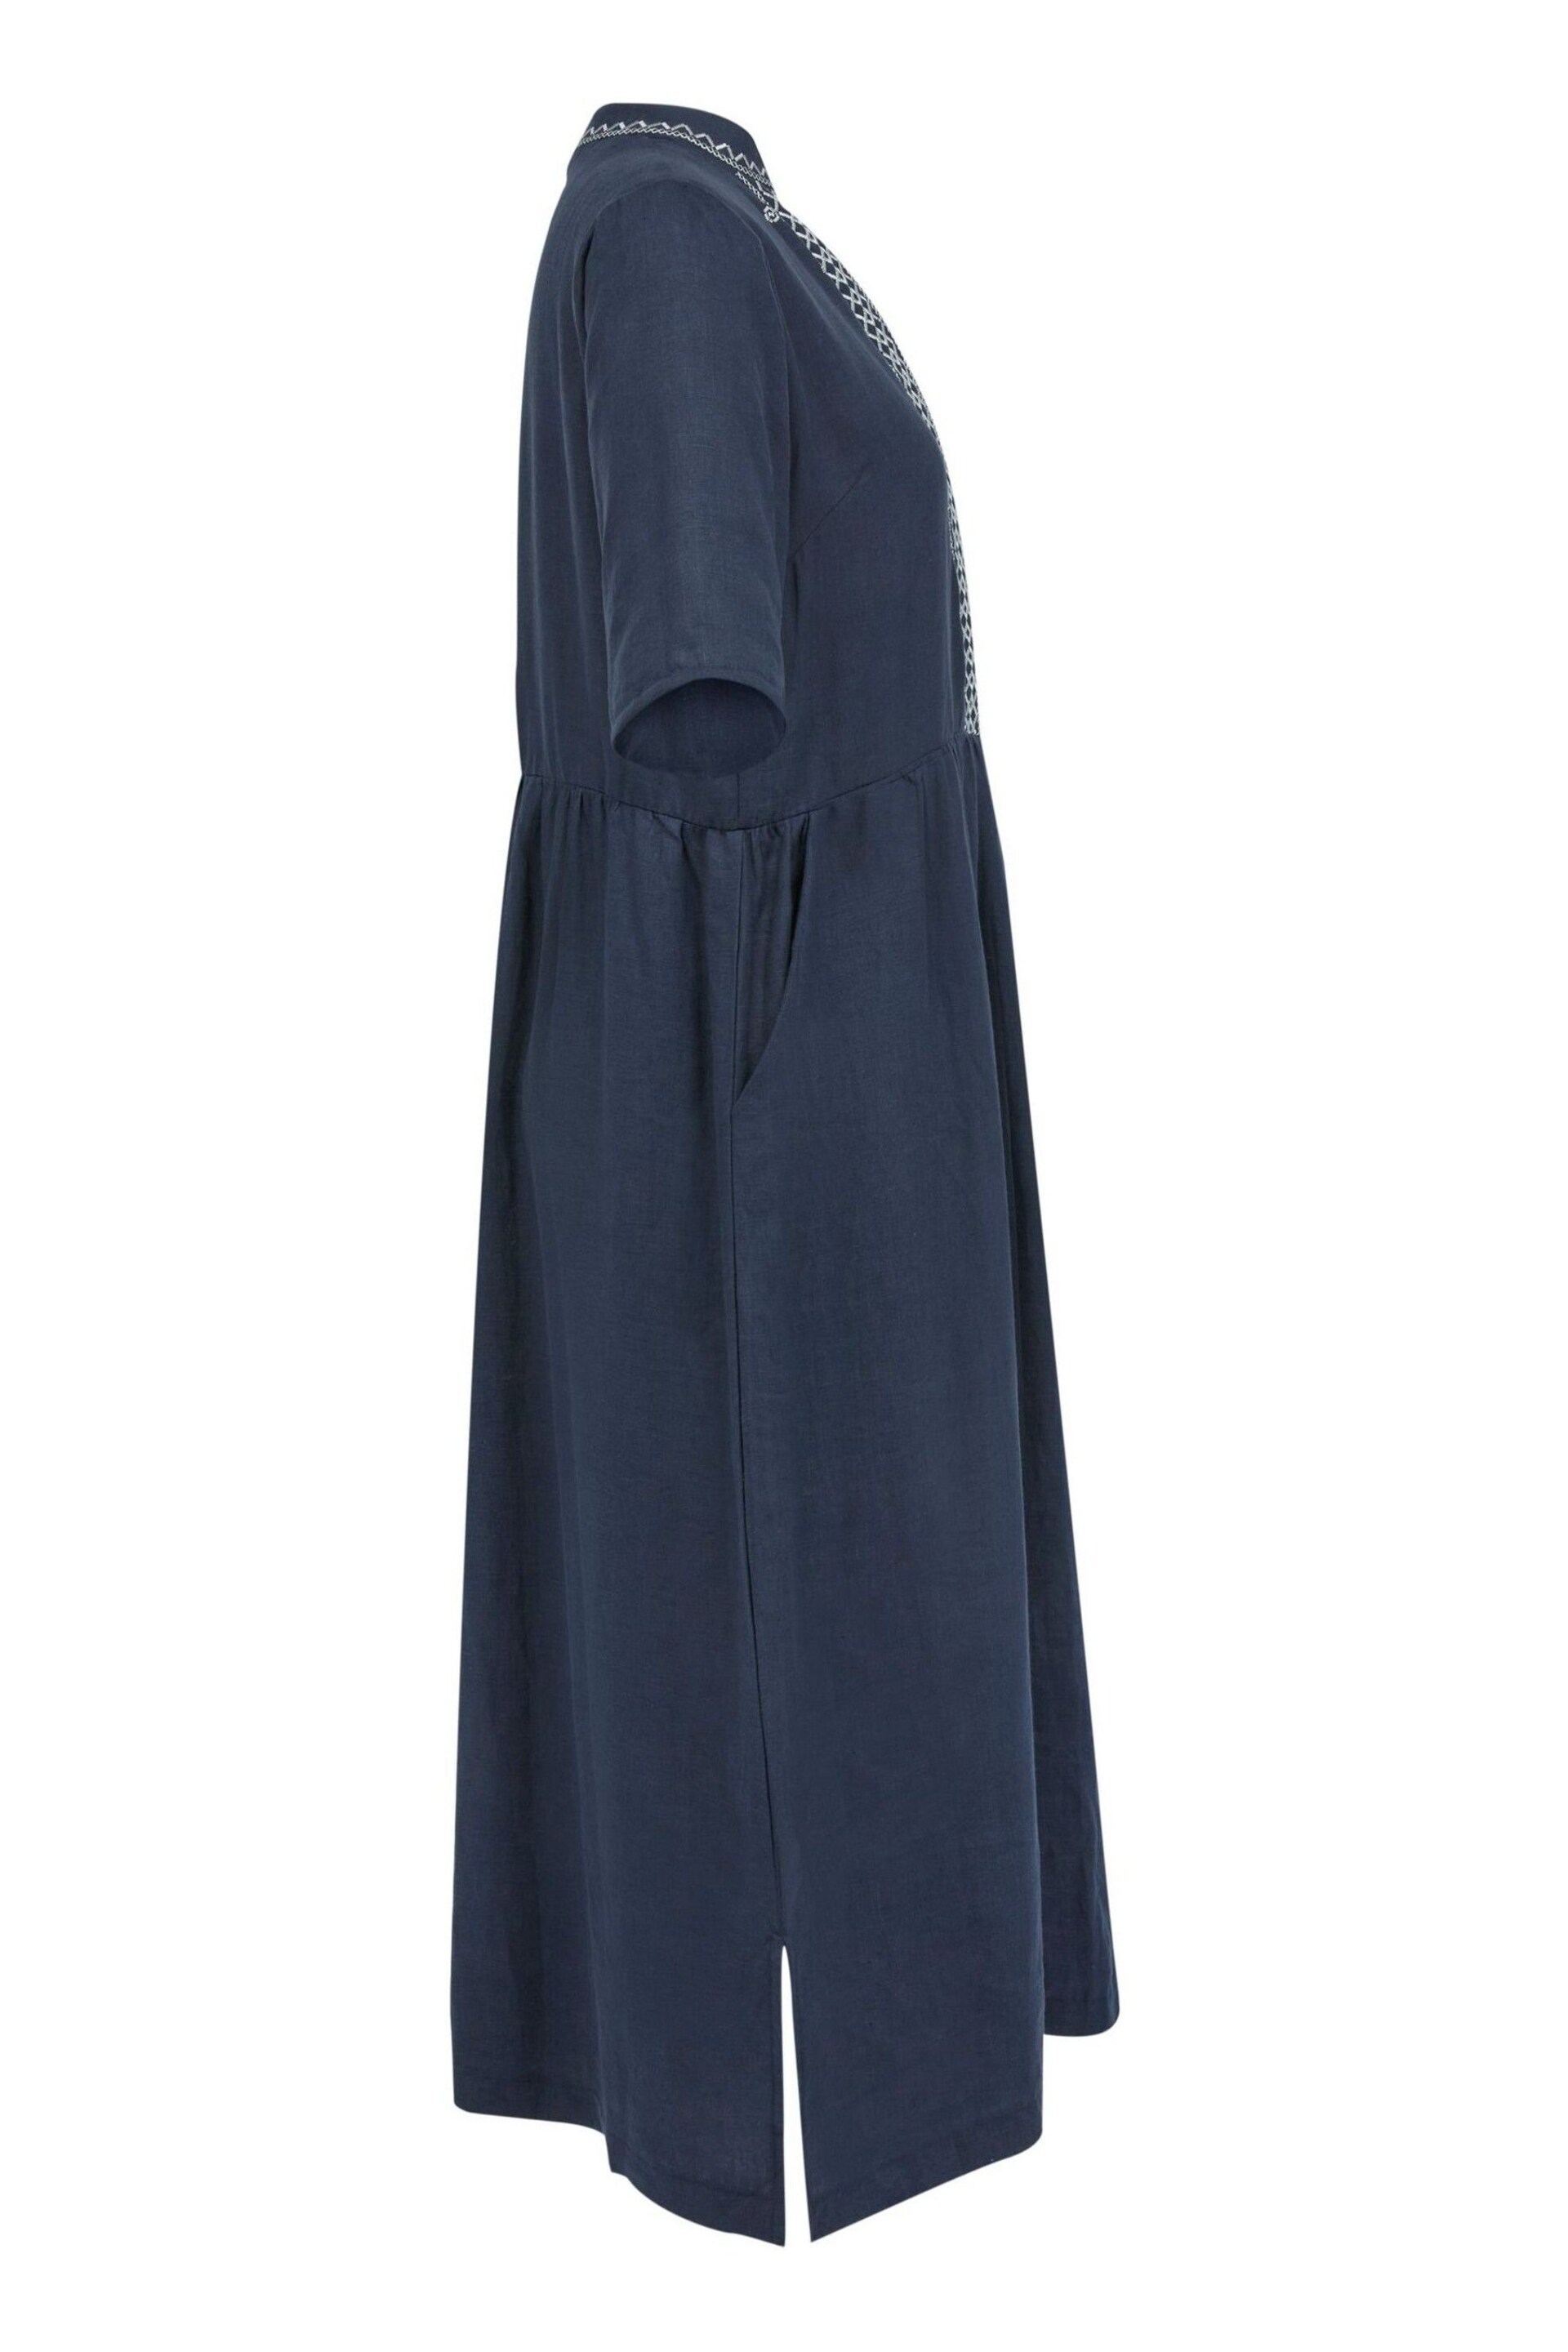 Celtic & Co. Blue Linen Embroidered Short Sleeve Midi Dress - Image 5 of 6